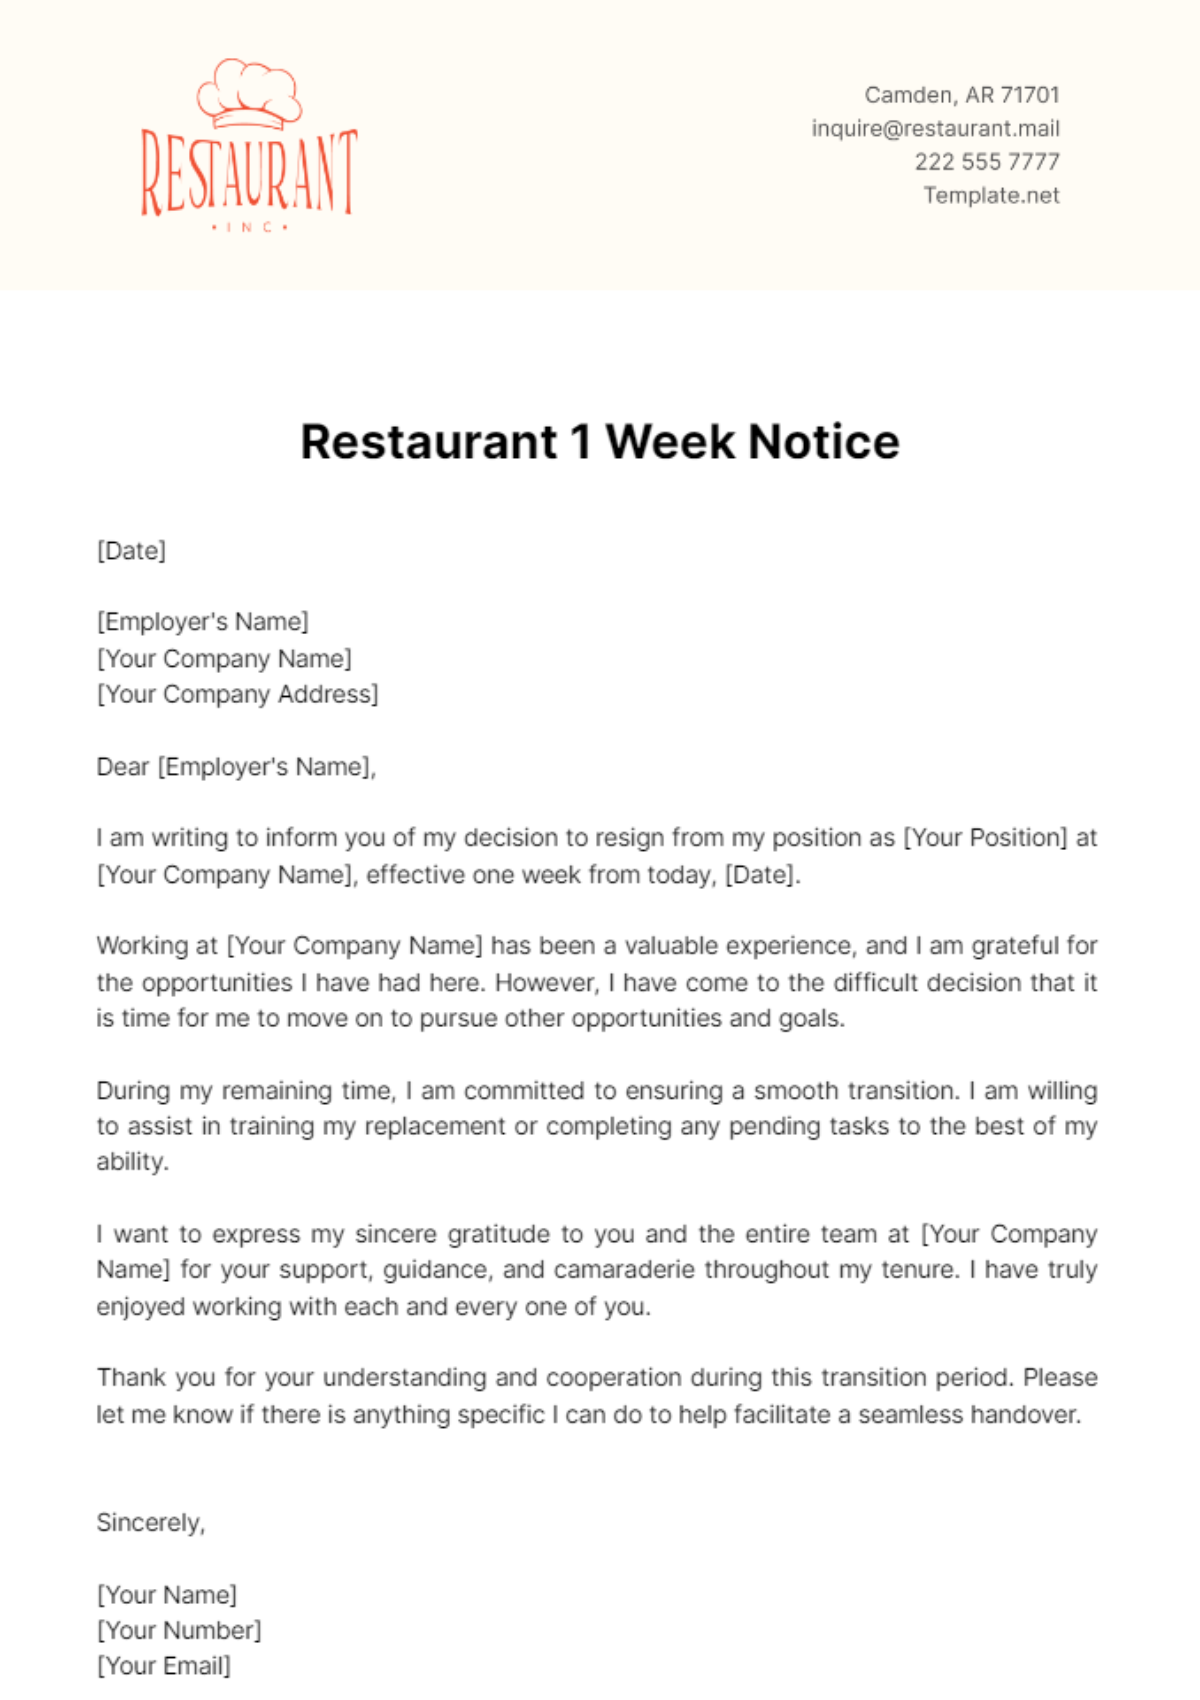 Free Restaurant 1 Week Notice Template